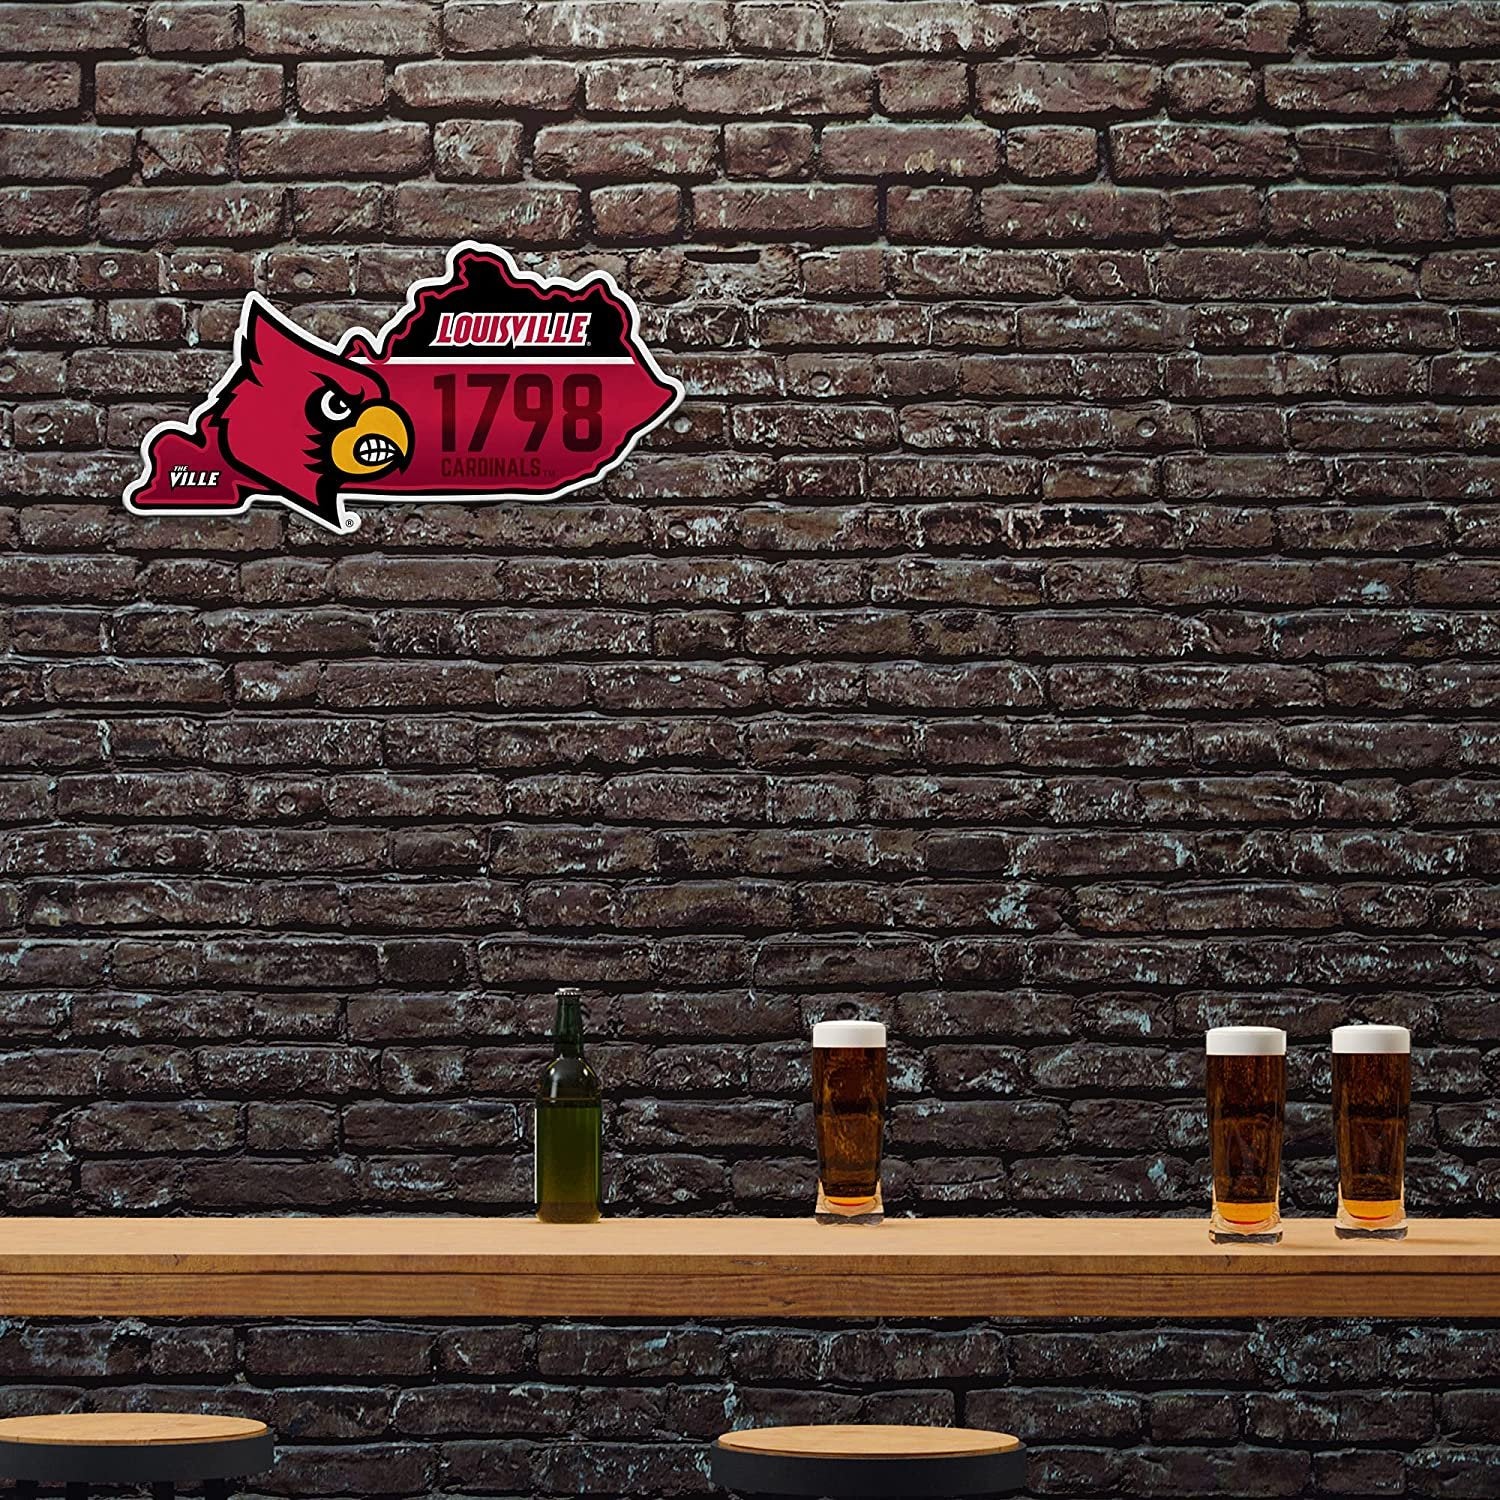 Louisville Cardinals Pennant State Shape 18 Inch Soft Felt University of